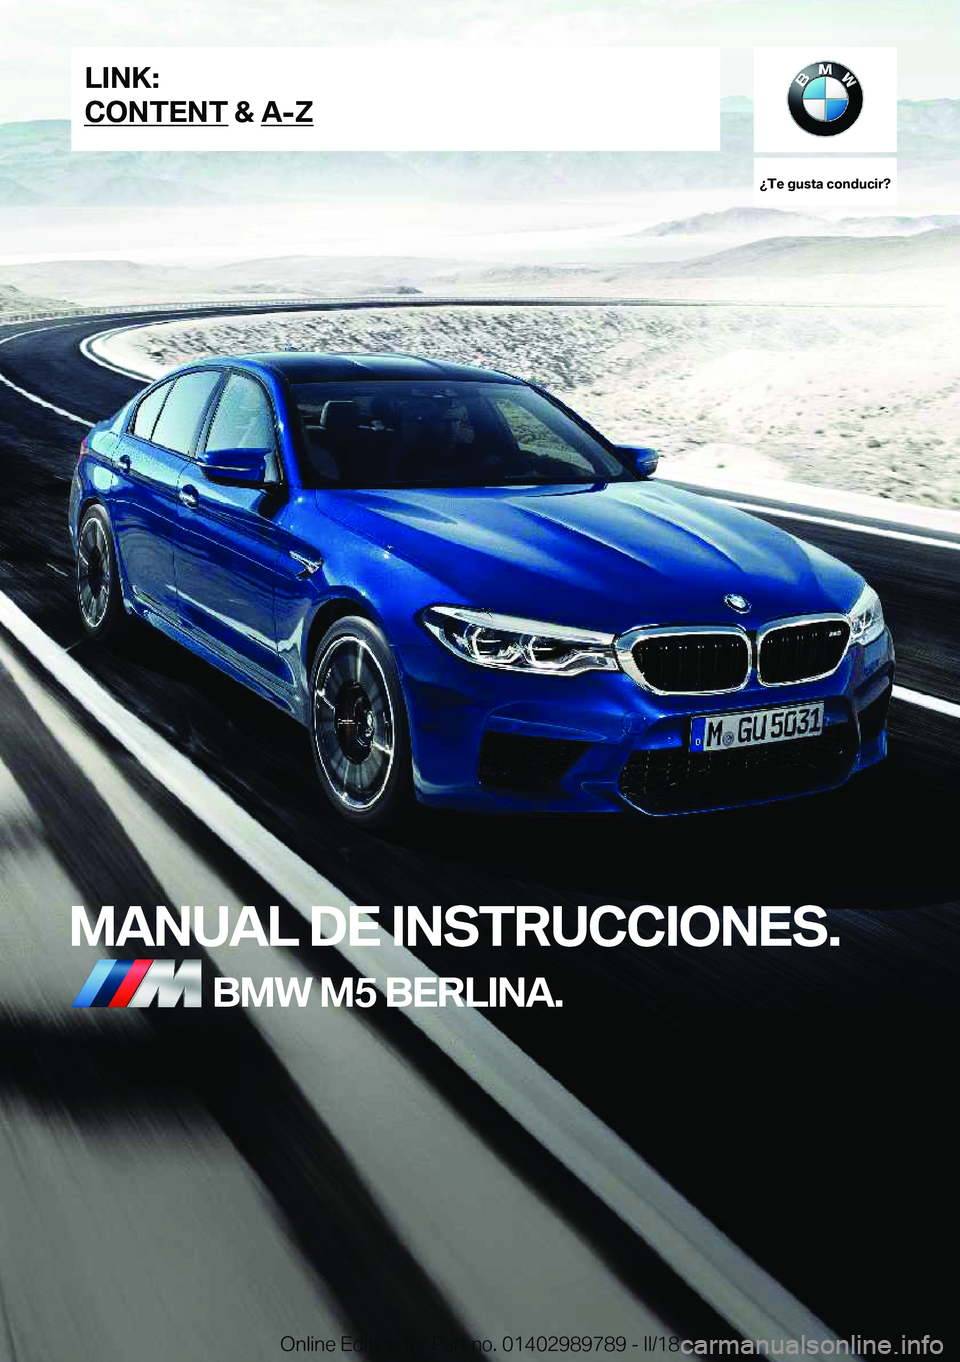 BMW M5 2018  Manuales de Empleo (in Spanish) ��T�e��g�u�s�t�a��c�o�n�d�u�c�i�r� 
�M�A�N�U�A�L��D�E��I�N�S�T�R�U�C�C�I�O�N�E�S�.�B�M�W��M�5��B�E�R�L�I�N�A�.�L�I�N�K�:
�C�O�N�T�E�N�T��&��A�-�Z�O�n�l�i�n�e� �E�d�i�t�i�o�n� �f�o�r� �P�a�r�t